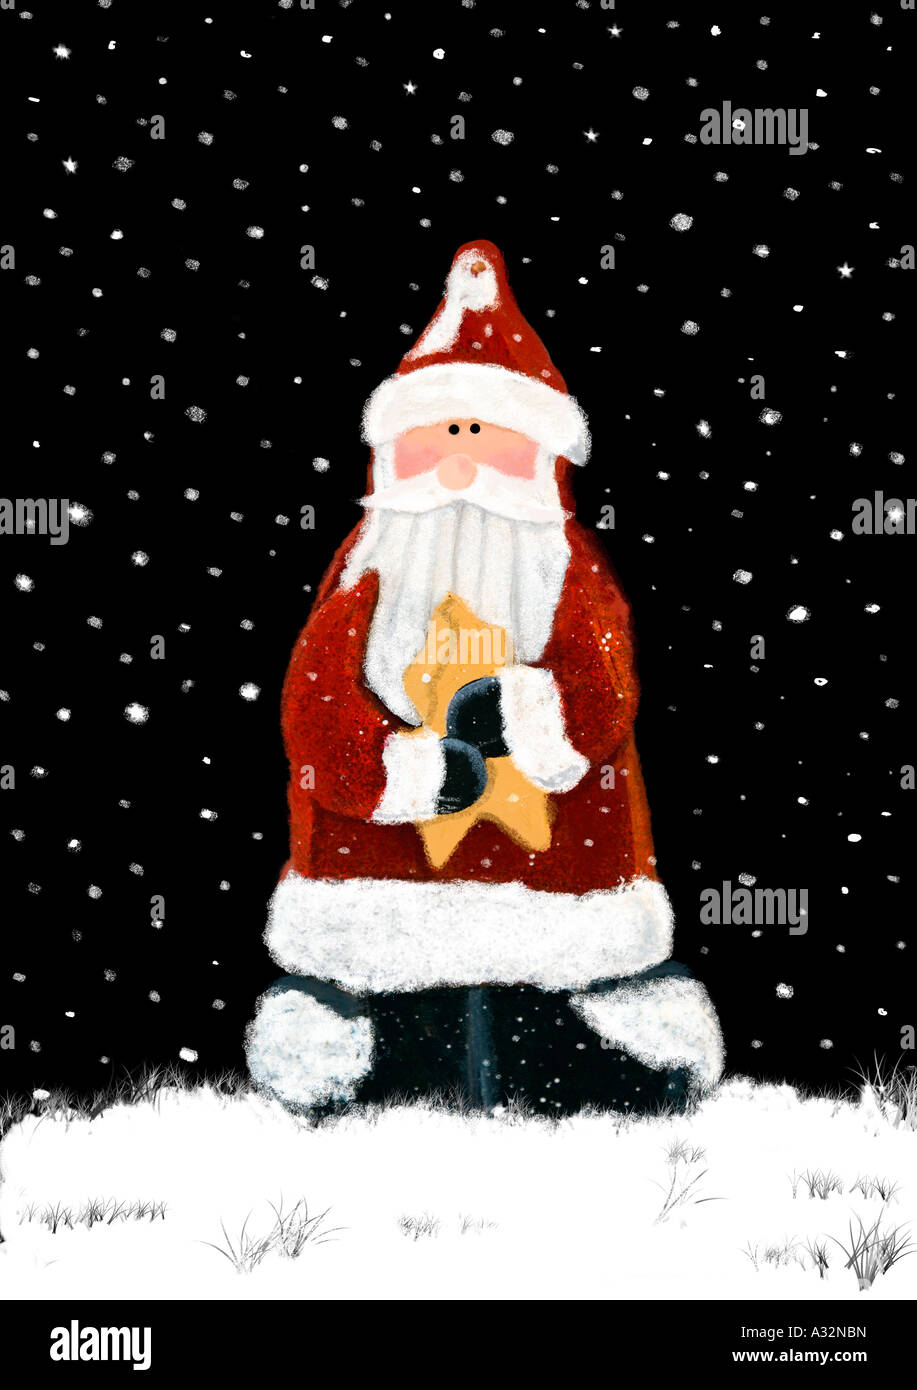 Santa illustration Stock Photo